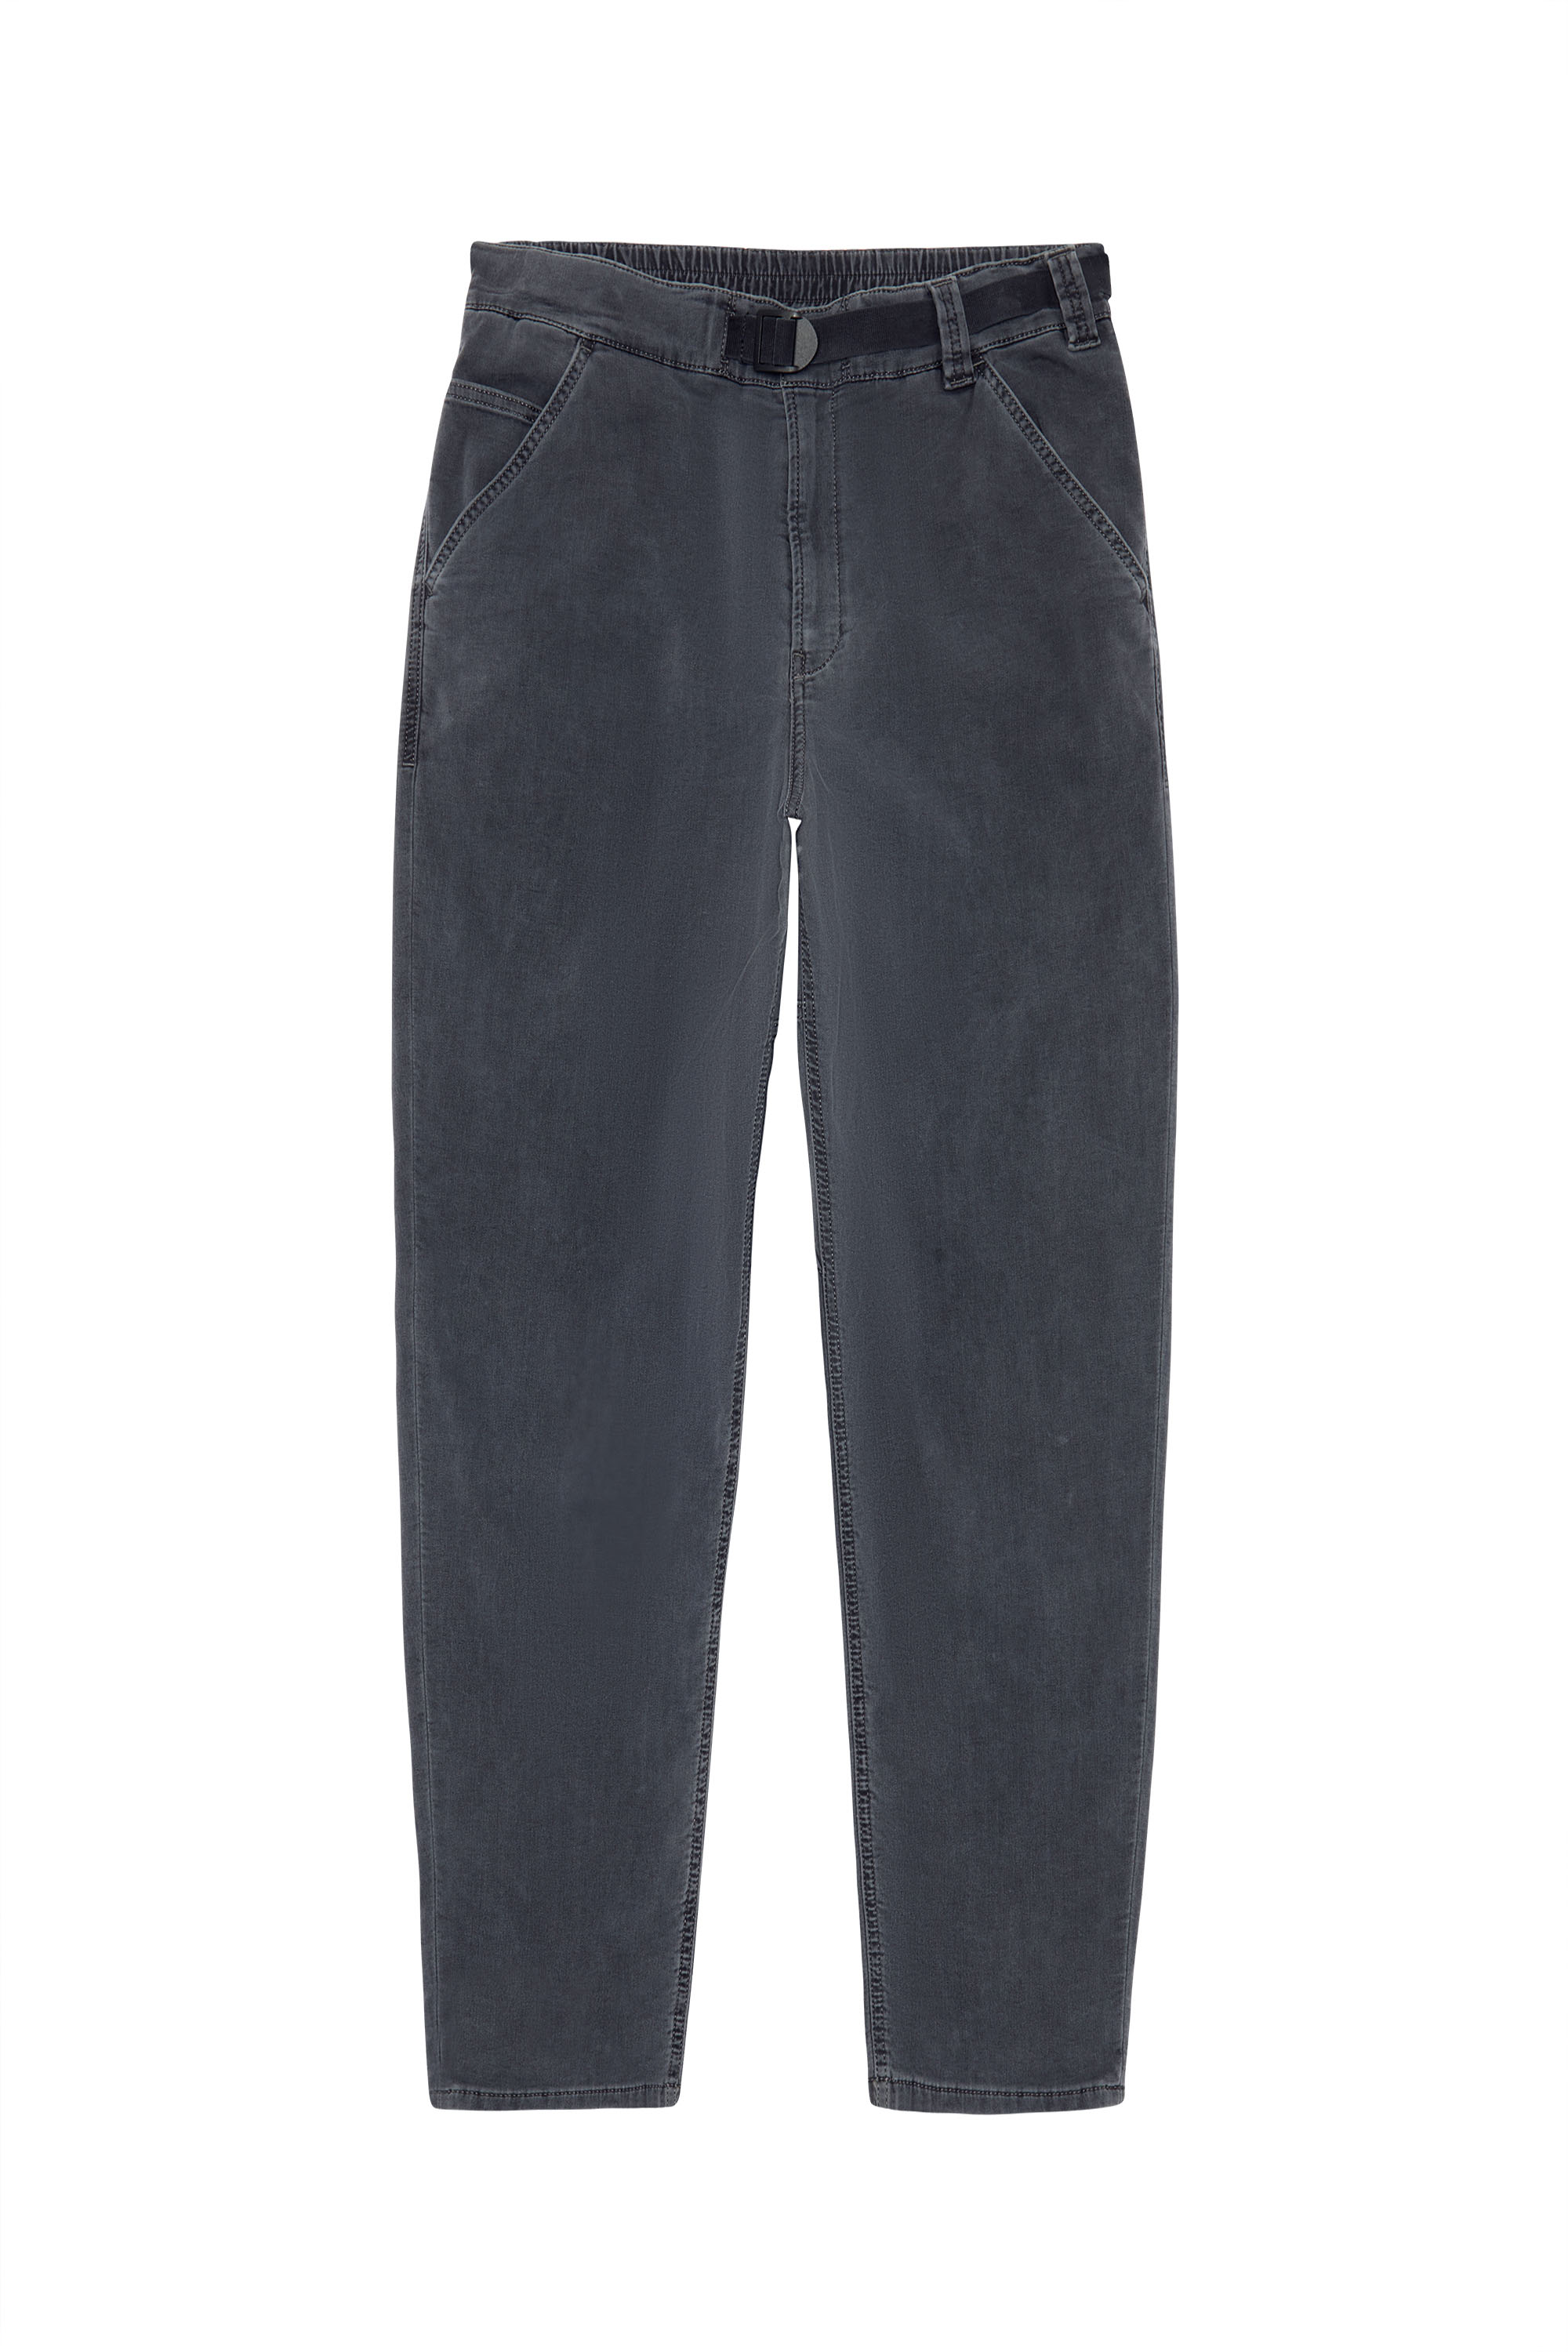 Krooley JoggJeans® 069ZH Tapered, Black/Dark grey - Jeans